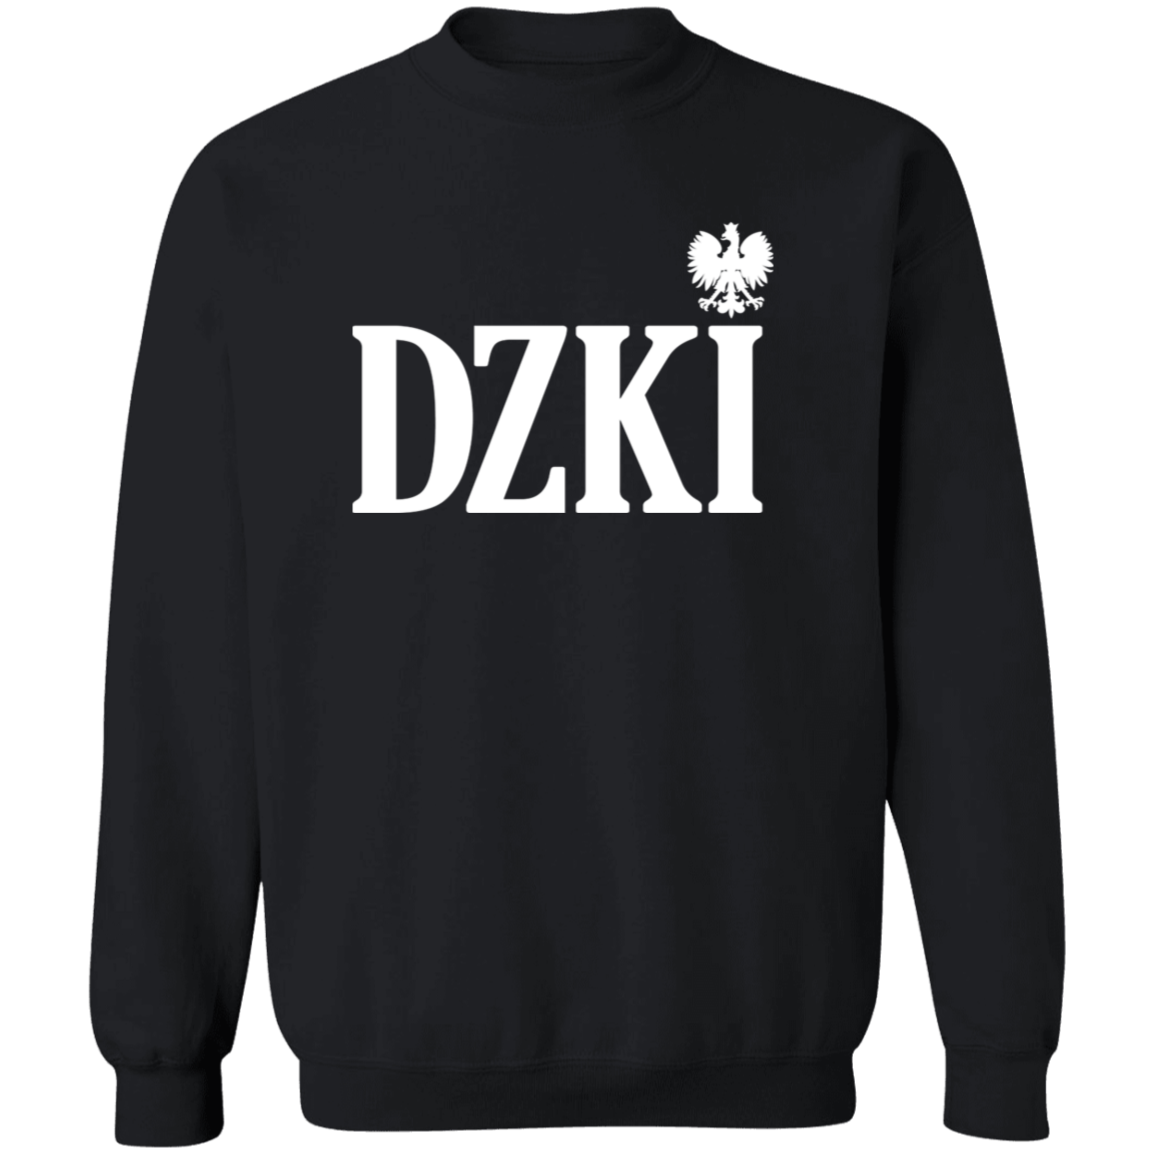 DZKI Polish Surname Ending Apparel CustomCat G180 Crewneck Pullover Sweatshirt Black S